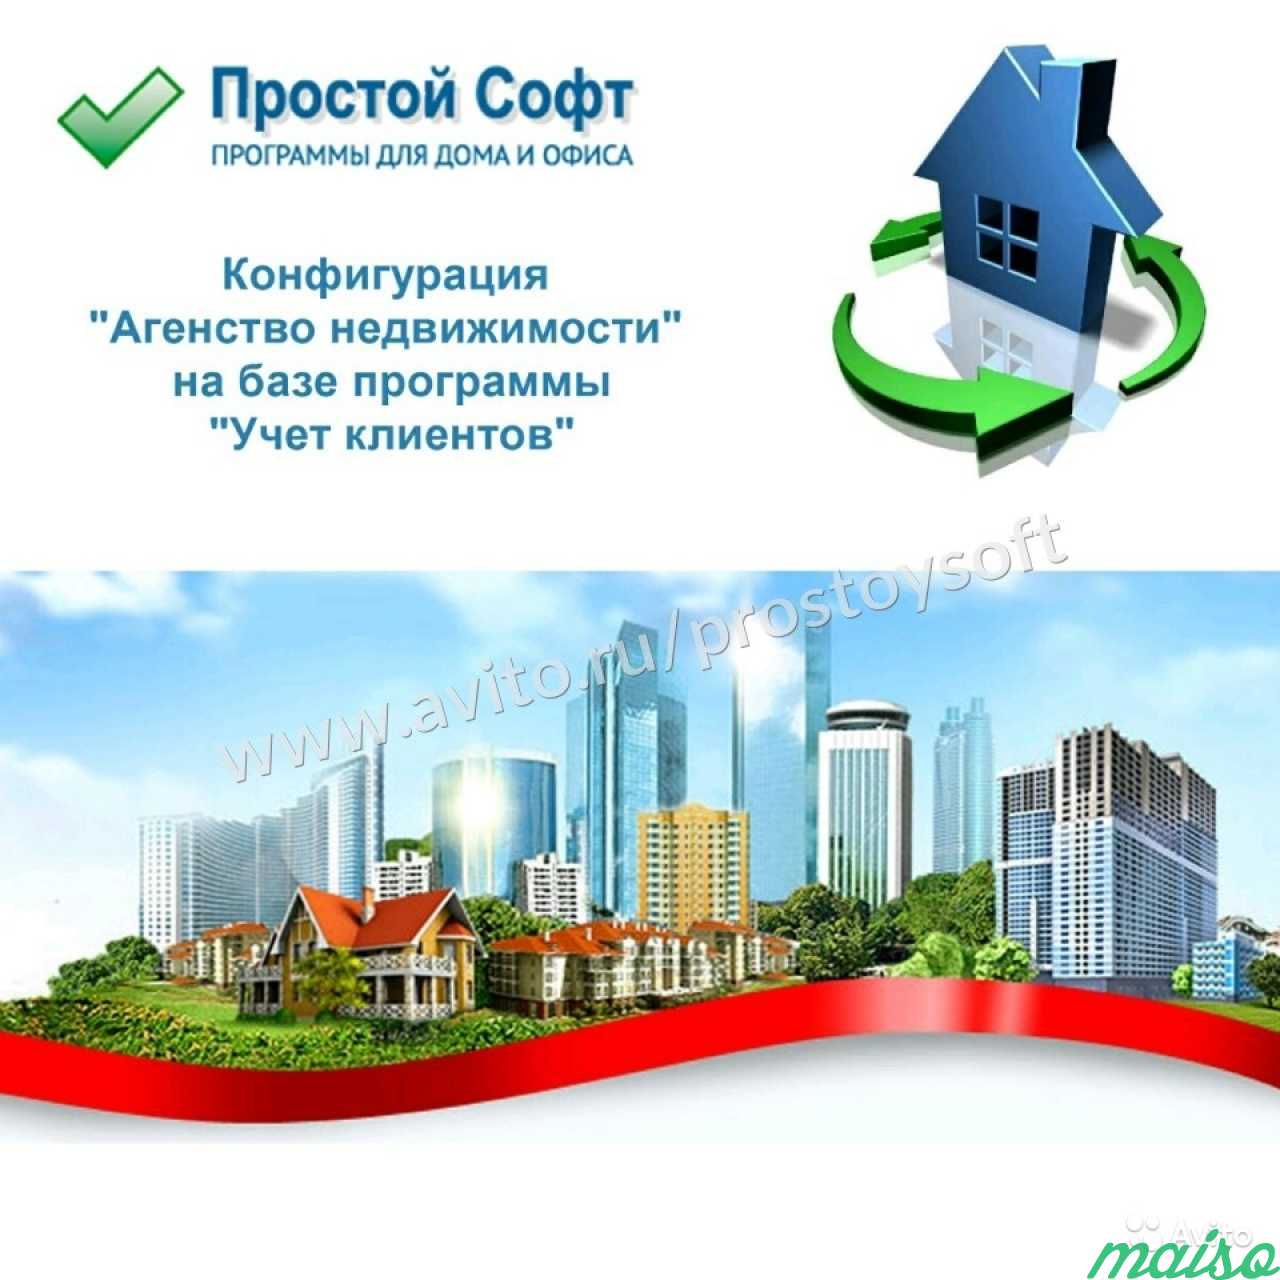 Конфигурация Агентство недвижимости в Санкт-Петербурге. Фото 2